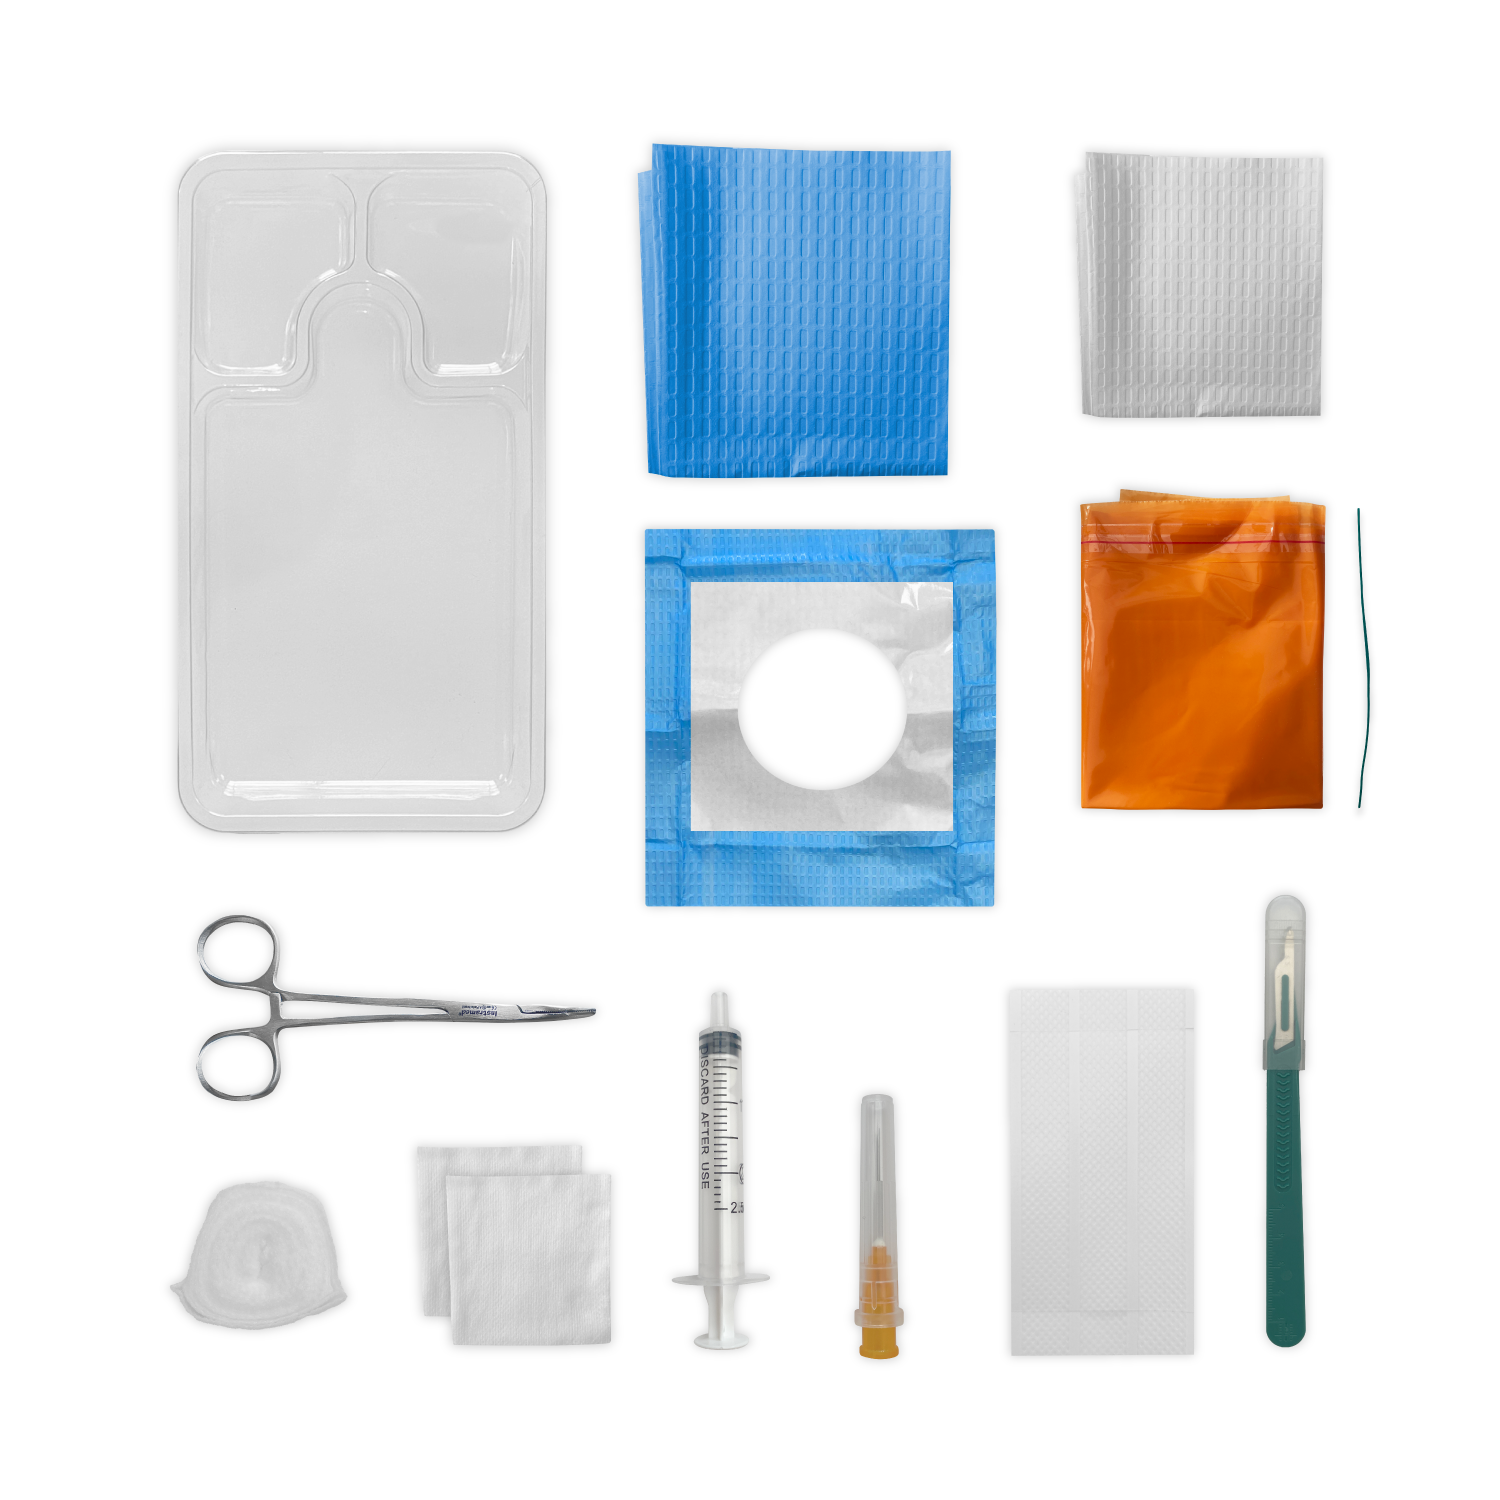 Instramed Implant Removal Kit (2)